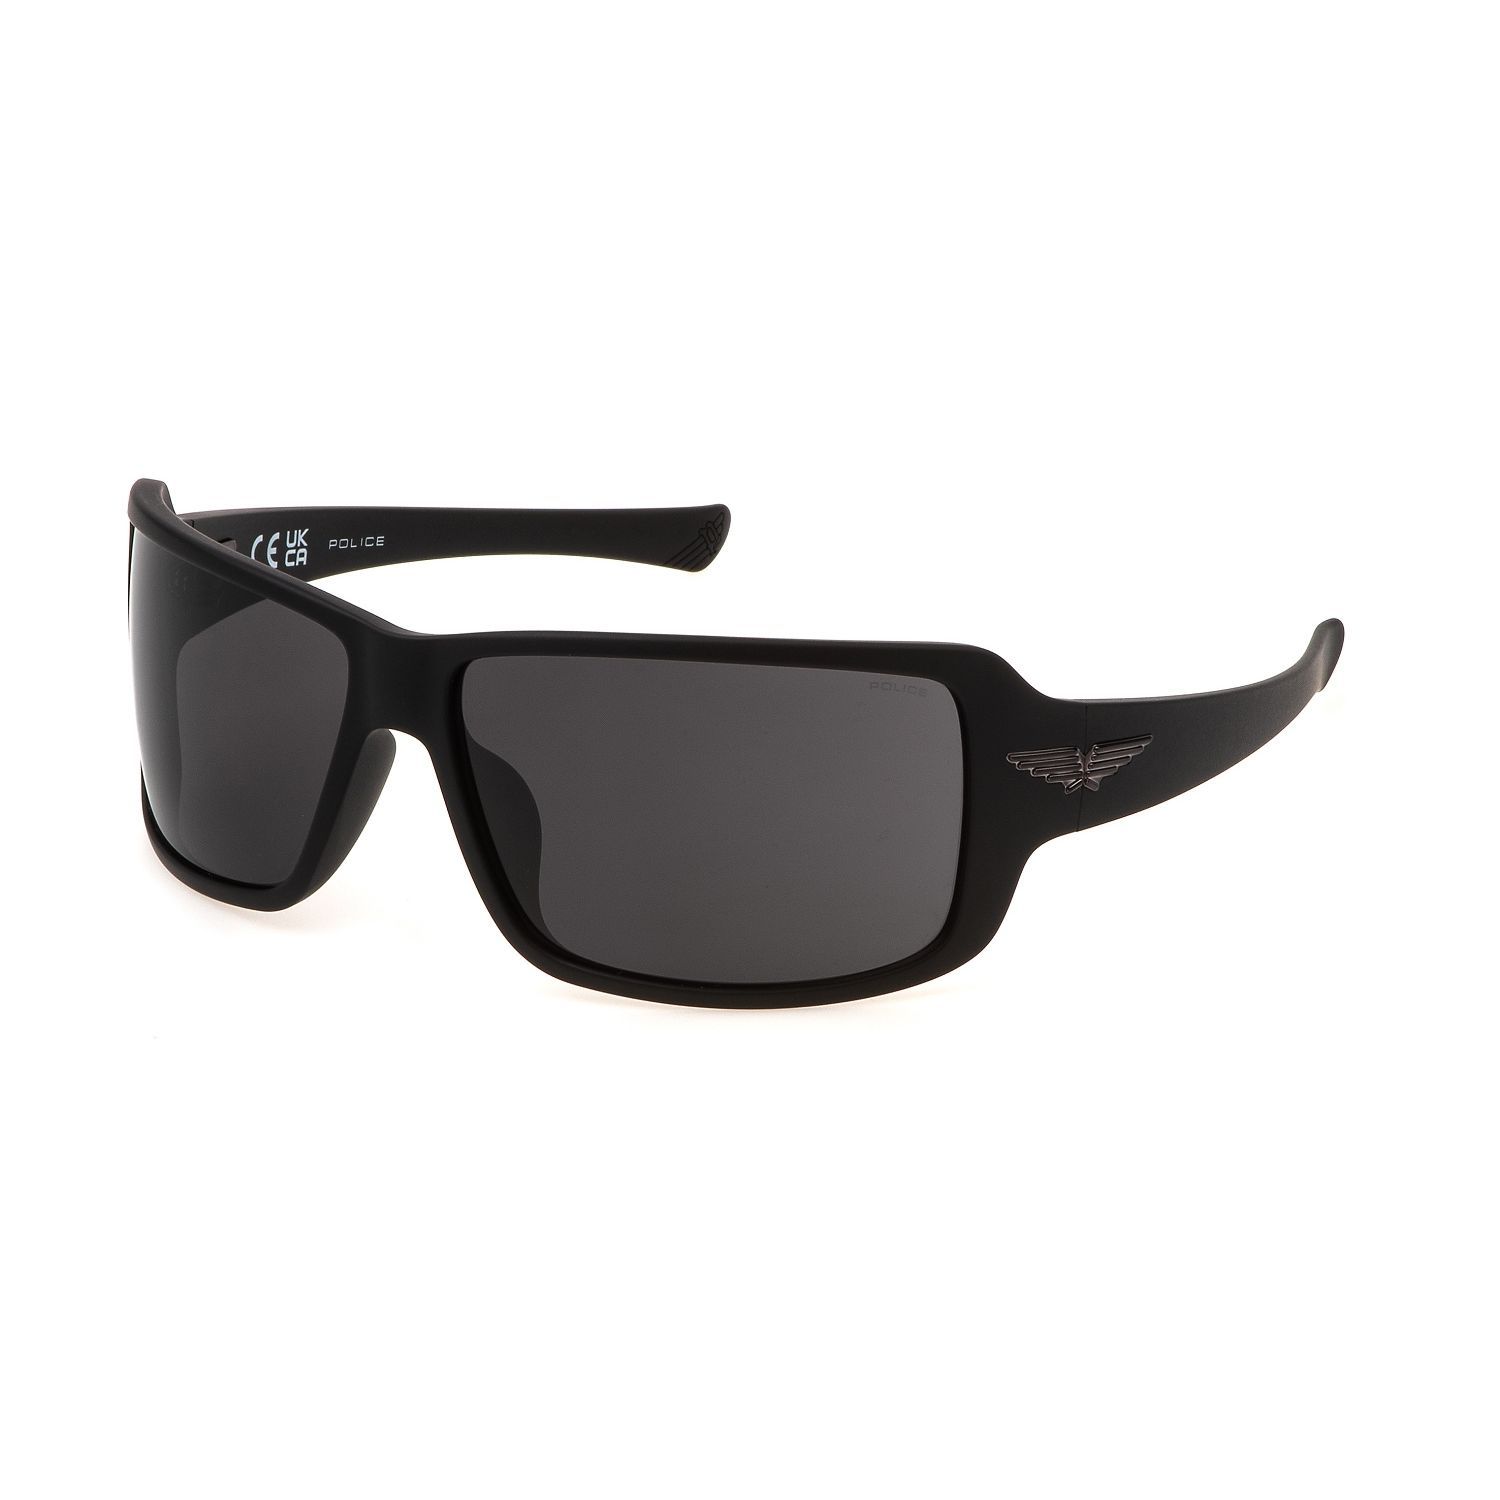 SPLN37M Square Sunglasses 0U28 - size 65